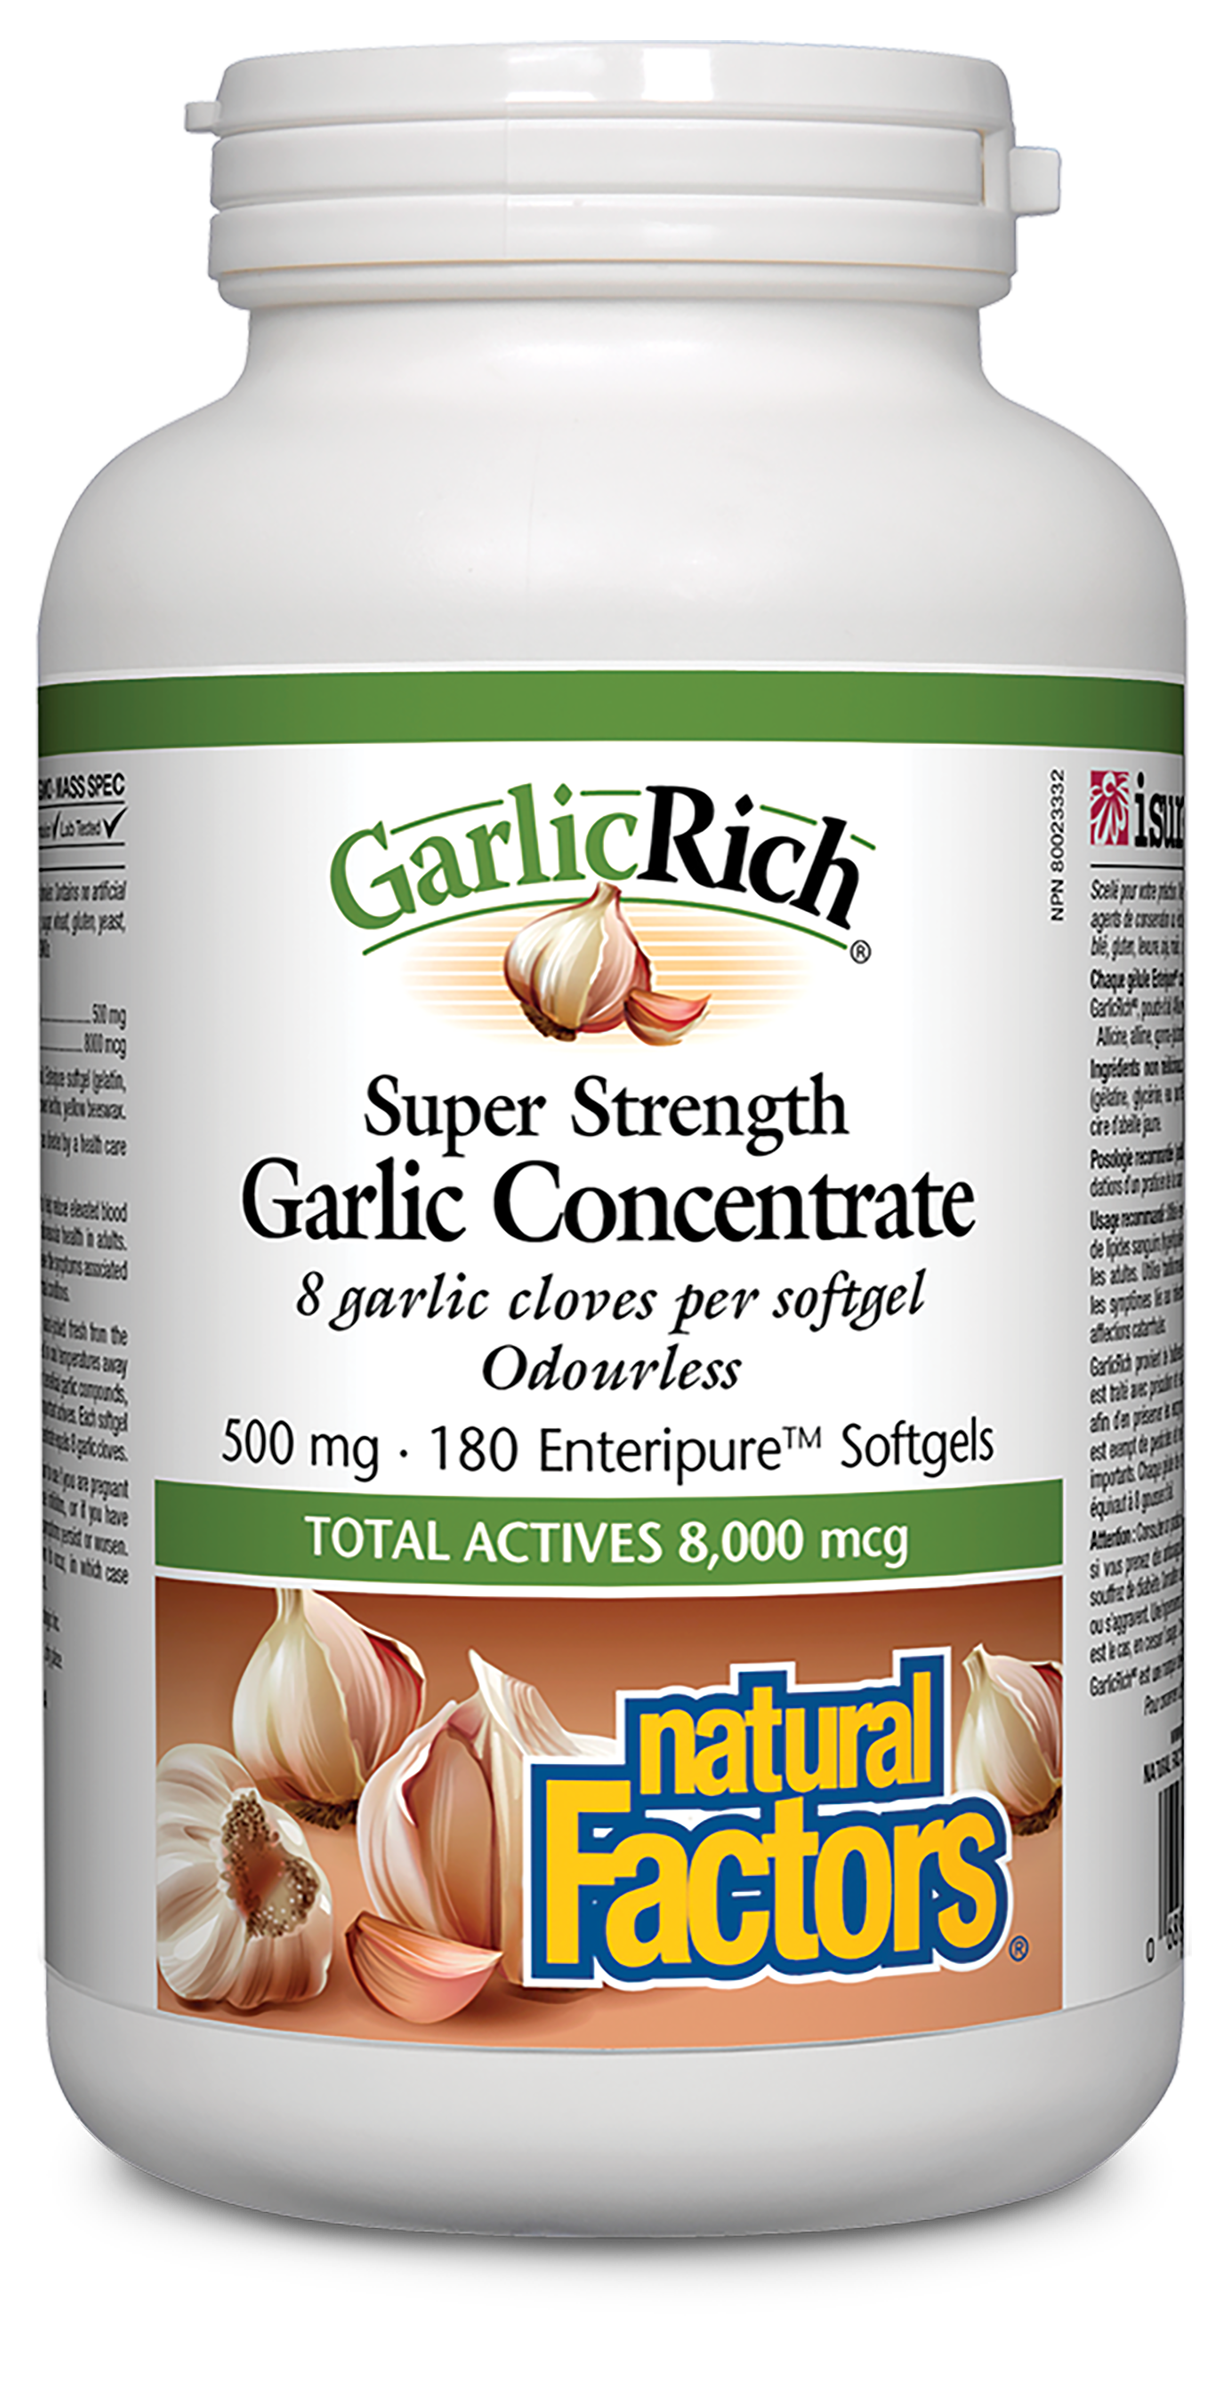 GarlicRich Super Strength Garlic Concentrate 500 mg, Natural Factors|v|image|2333